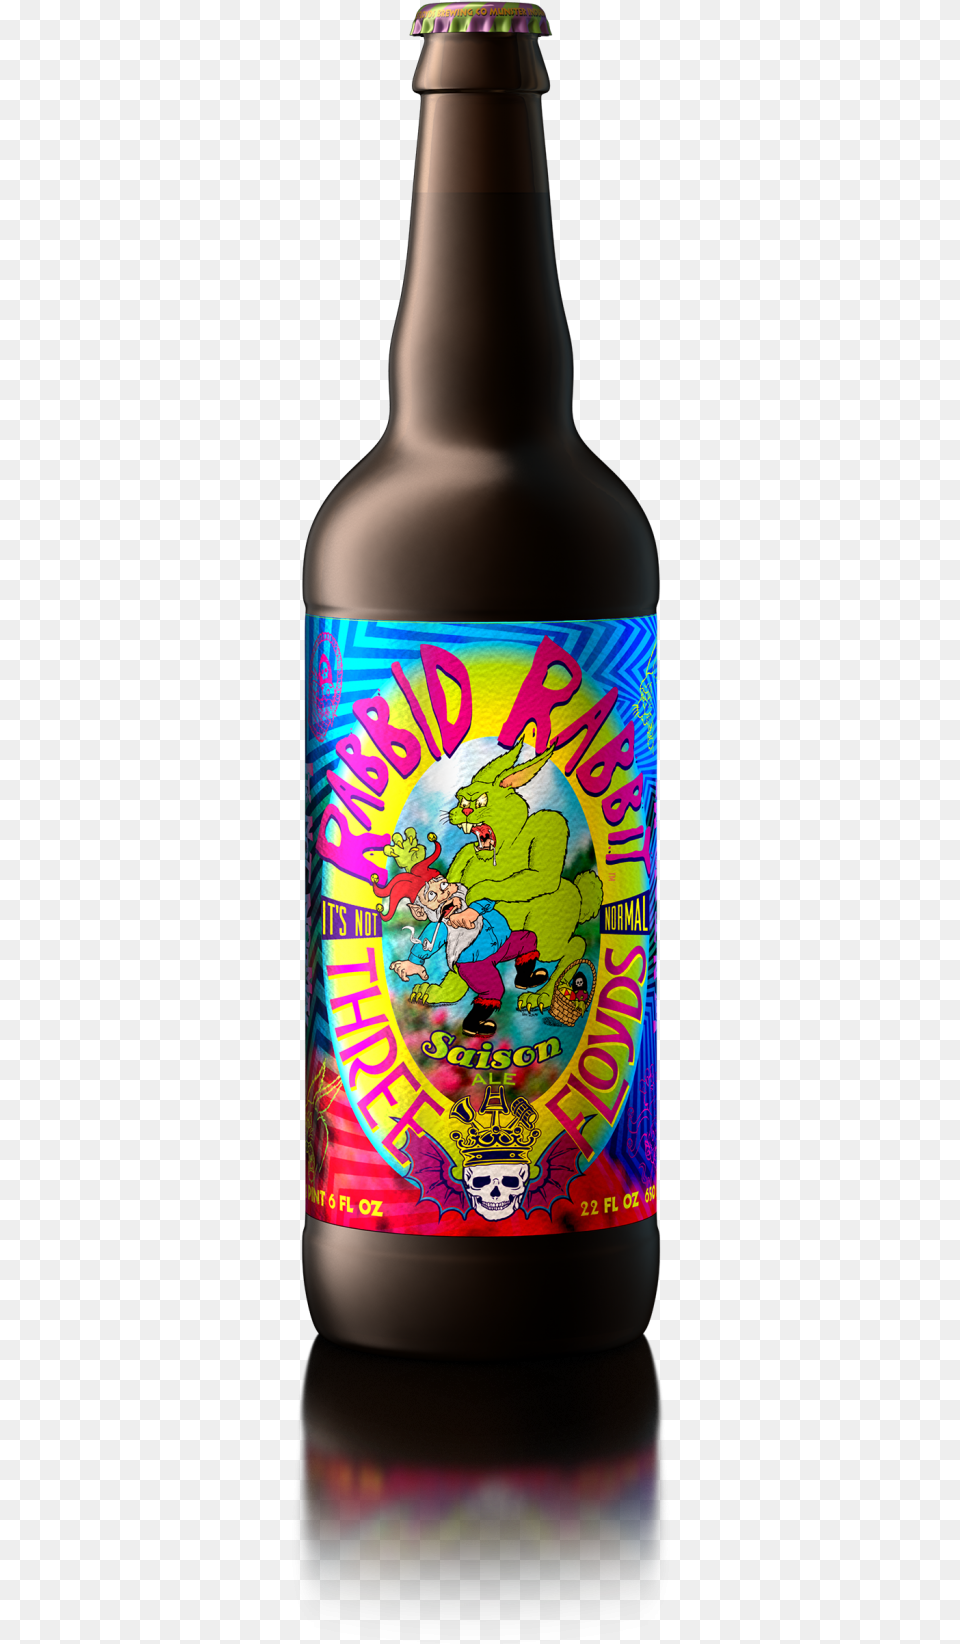 Three Floyds Rabbid Rabbit, Alcohol, Beer, Beer Bottle, Beverage Png Image